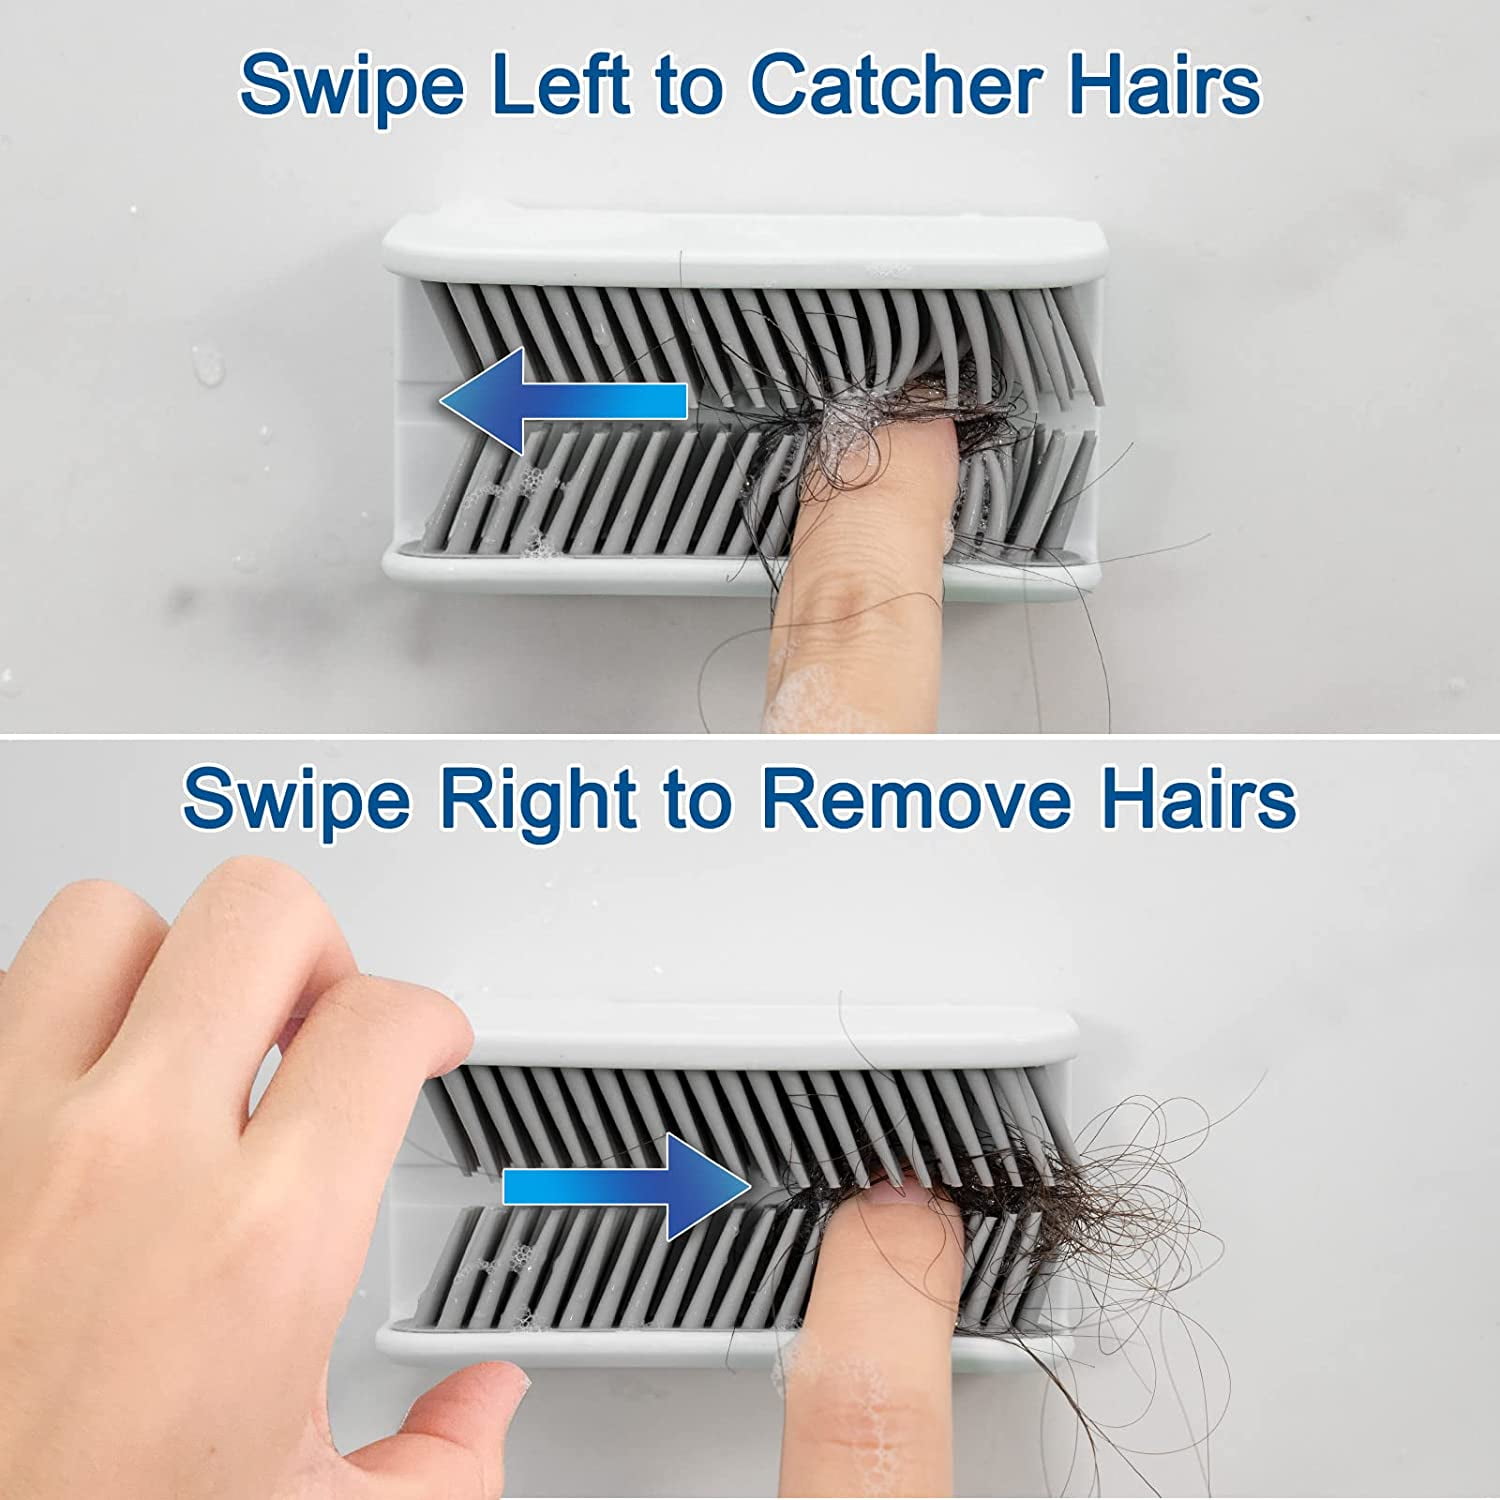 INVIHUG, Shower Hair Catcher Wall, Hair Collector for Shower Drain, Love  Full House Hair Catcher Wall-Mounted, Shower Drain Protector (Blue Love)